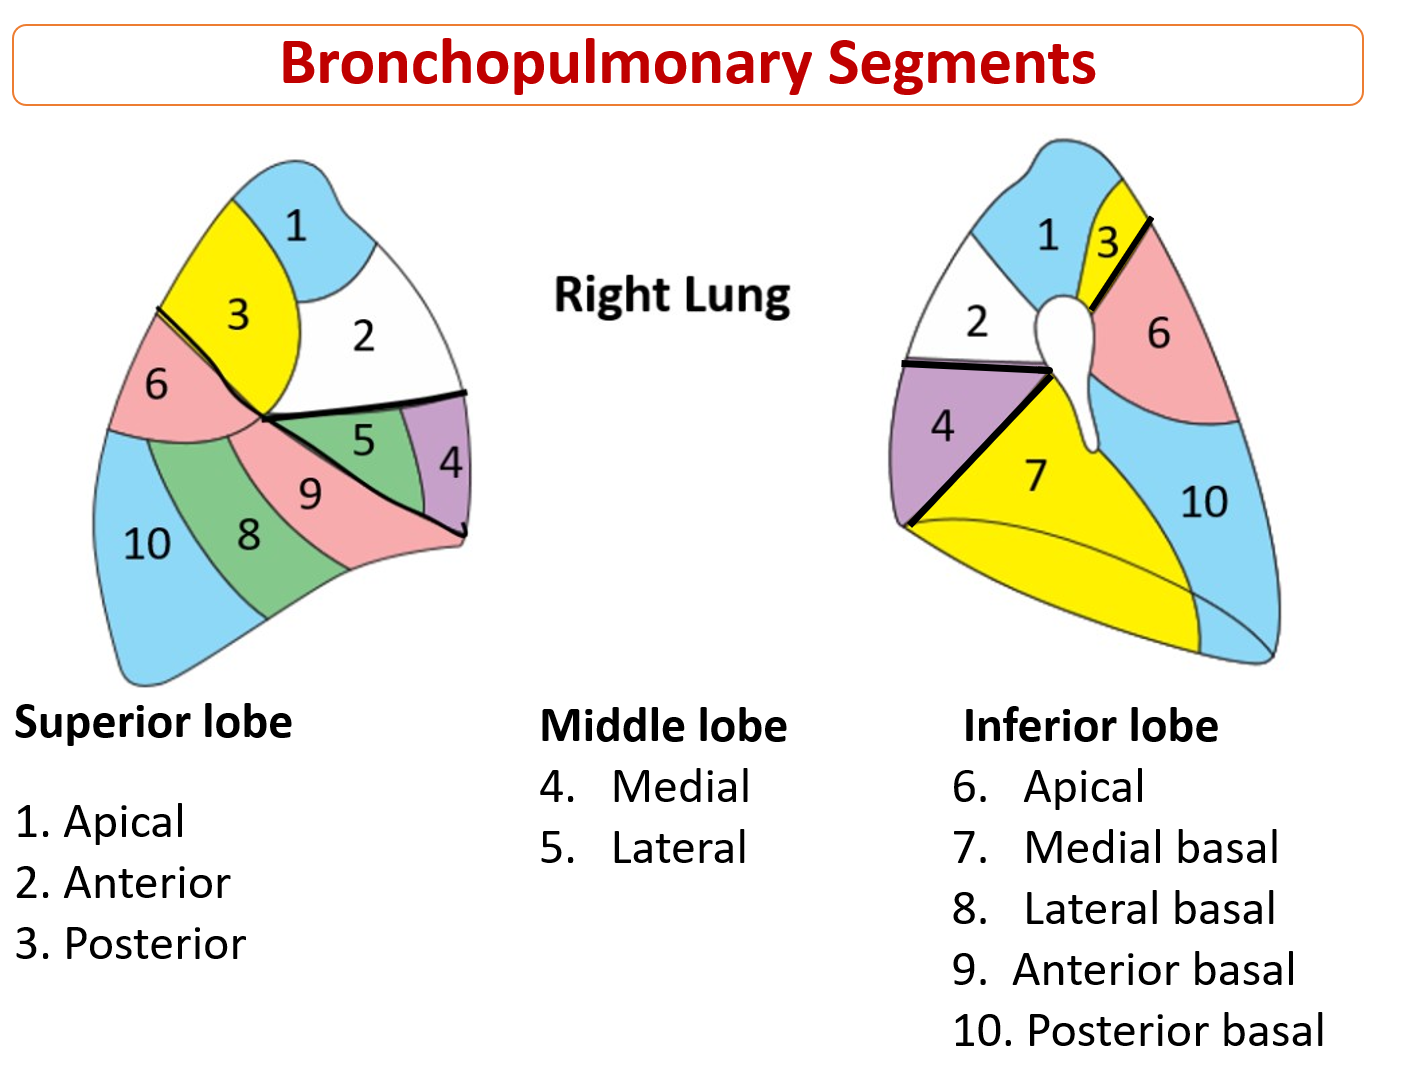 Bronchopulmonary segments of right lung